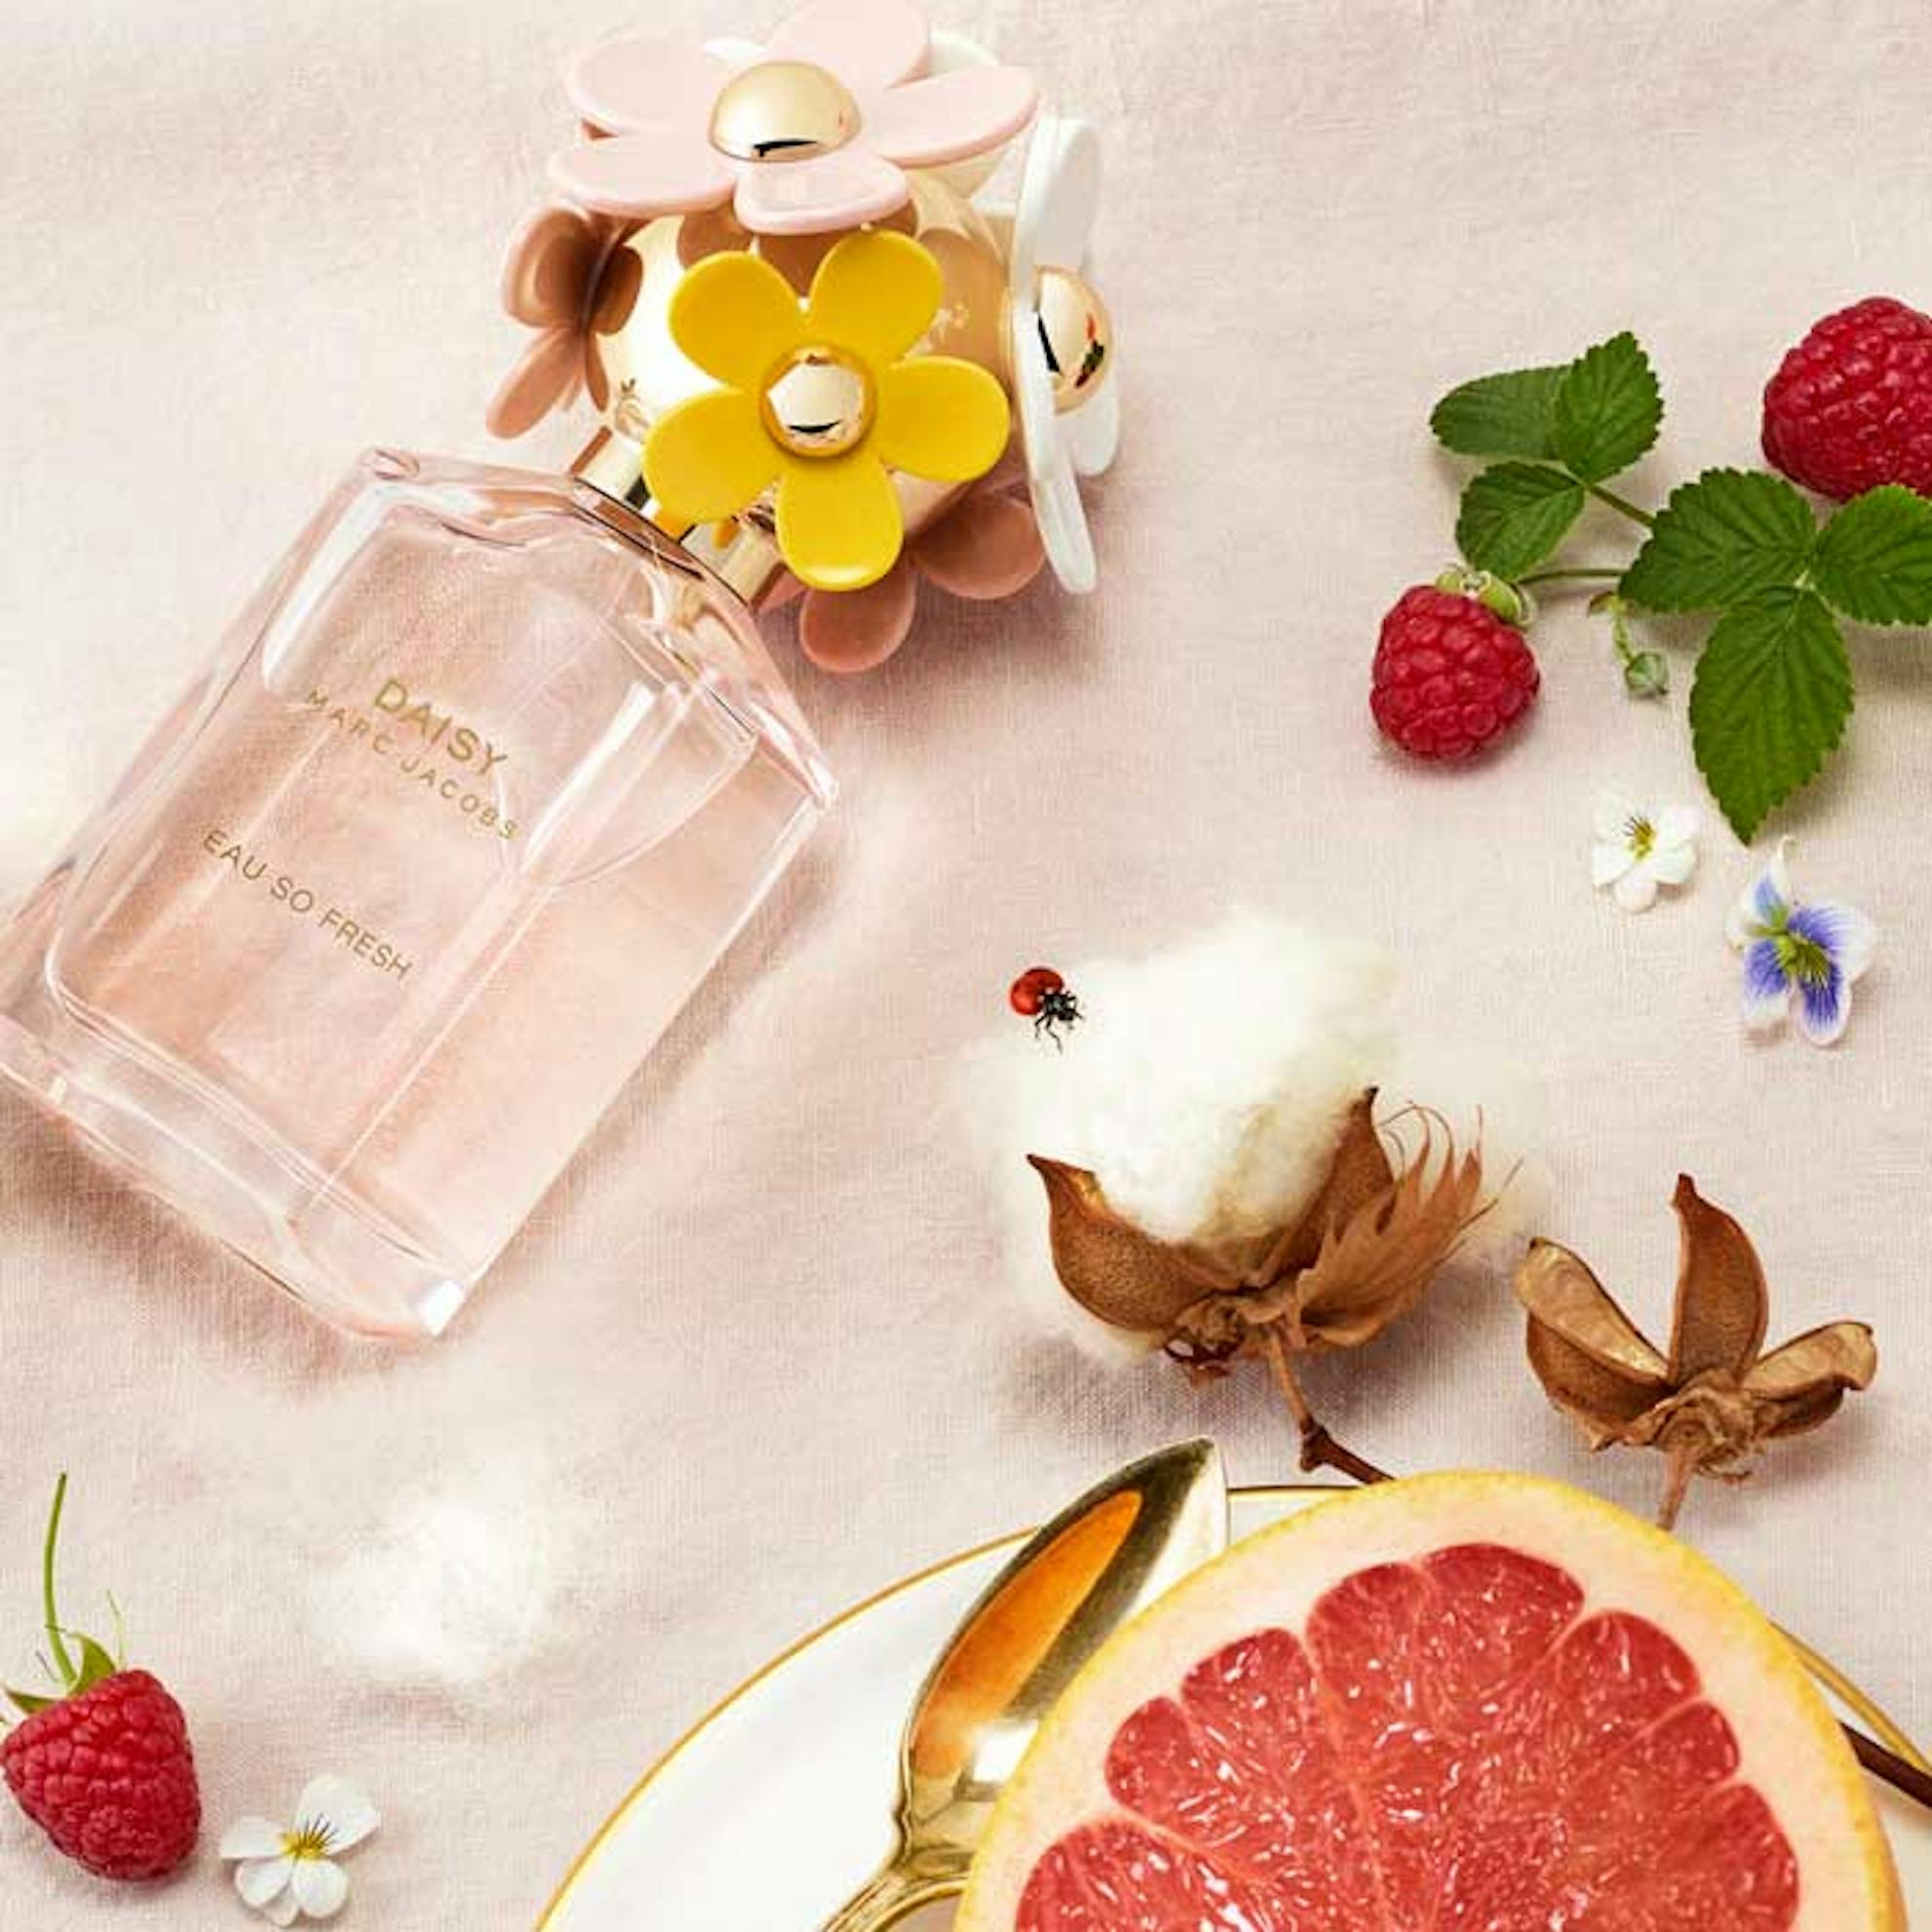 Marc Jacobs Daisy Eau So Fresh Perfume for Women, 75ml, The Fragrance  Shop